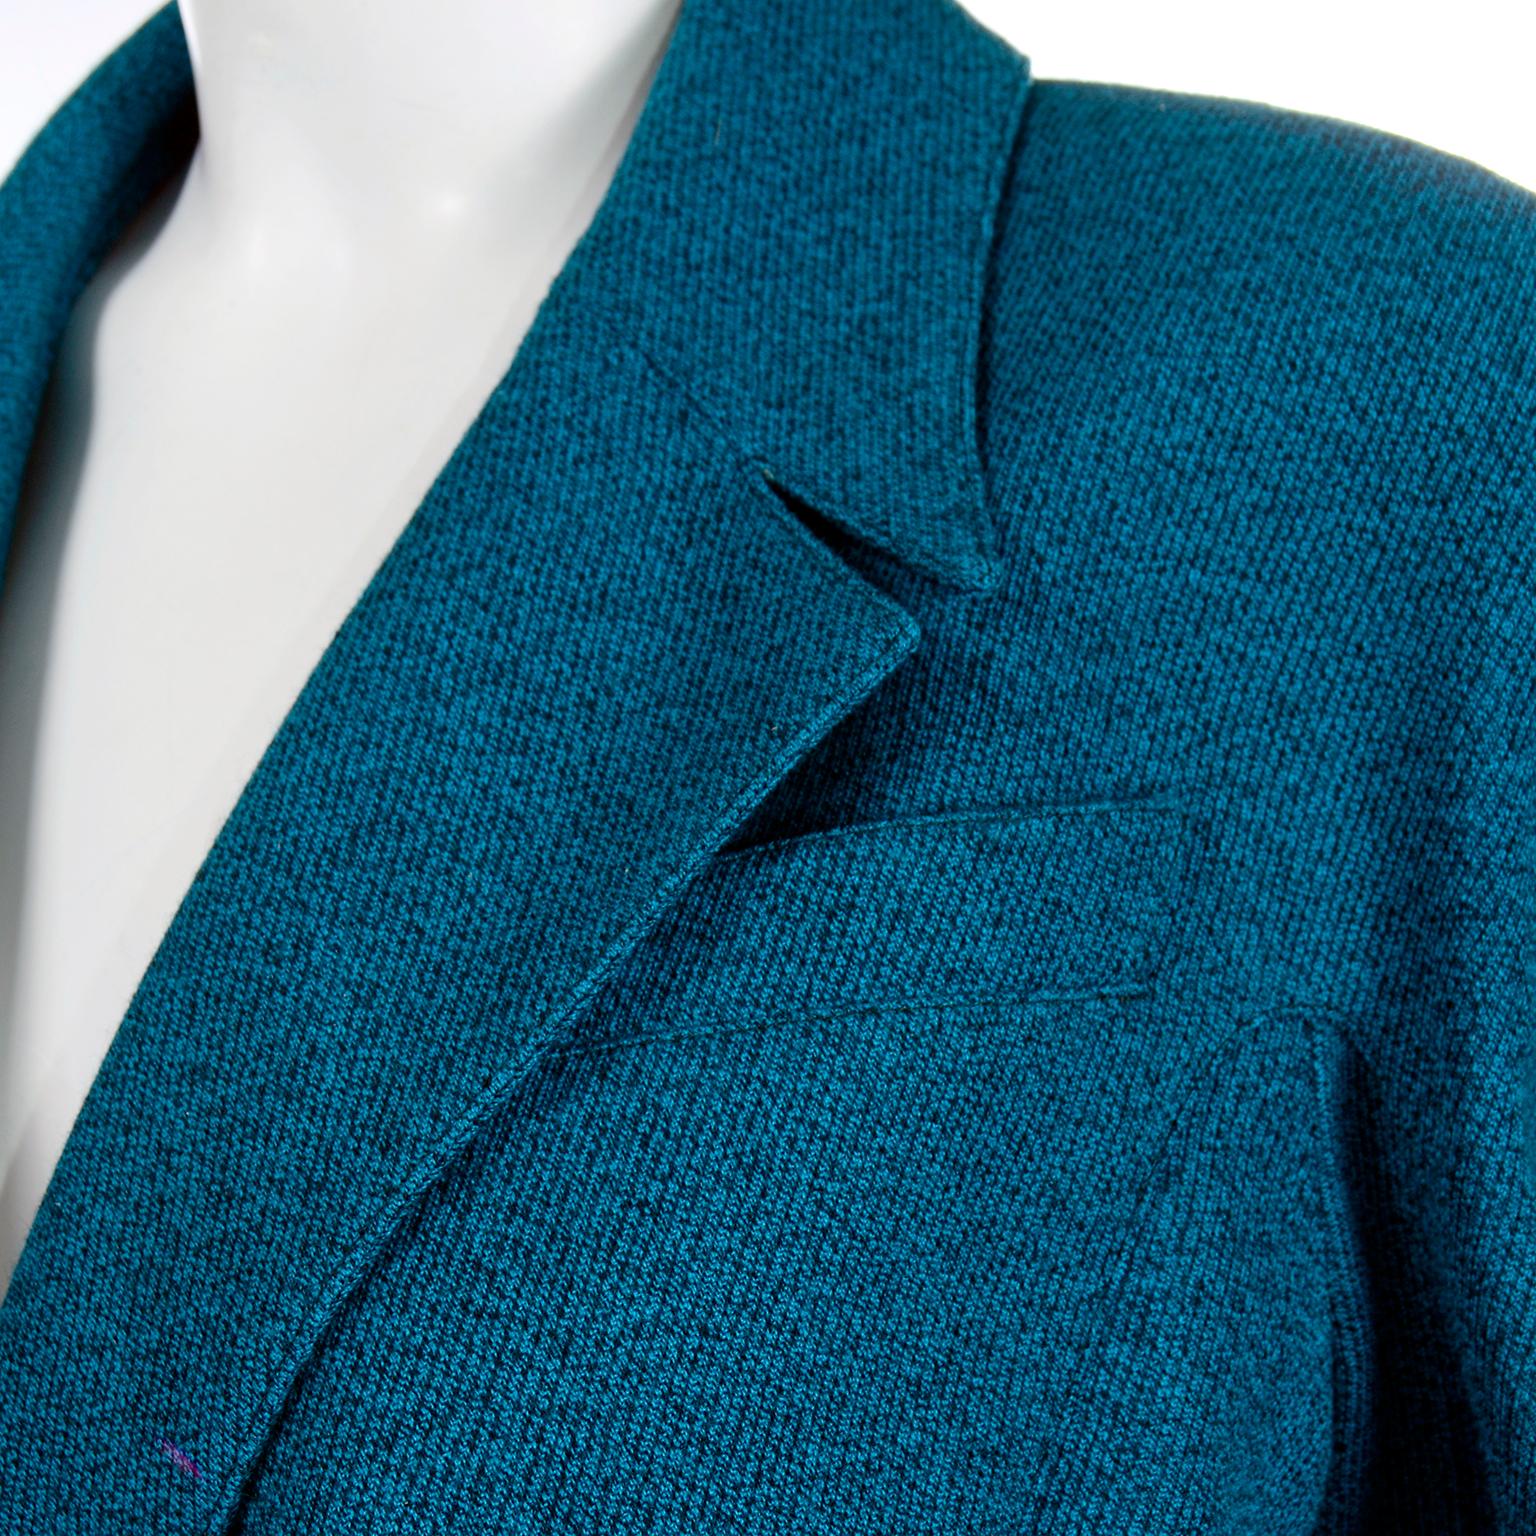 Thierry Mugler Paris Vintage Teal Green Black Speckled Wool Jacket at ...